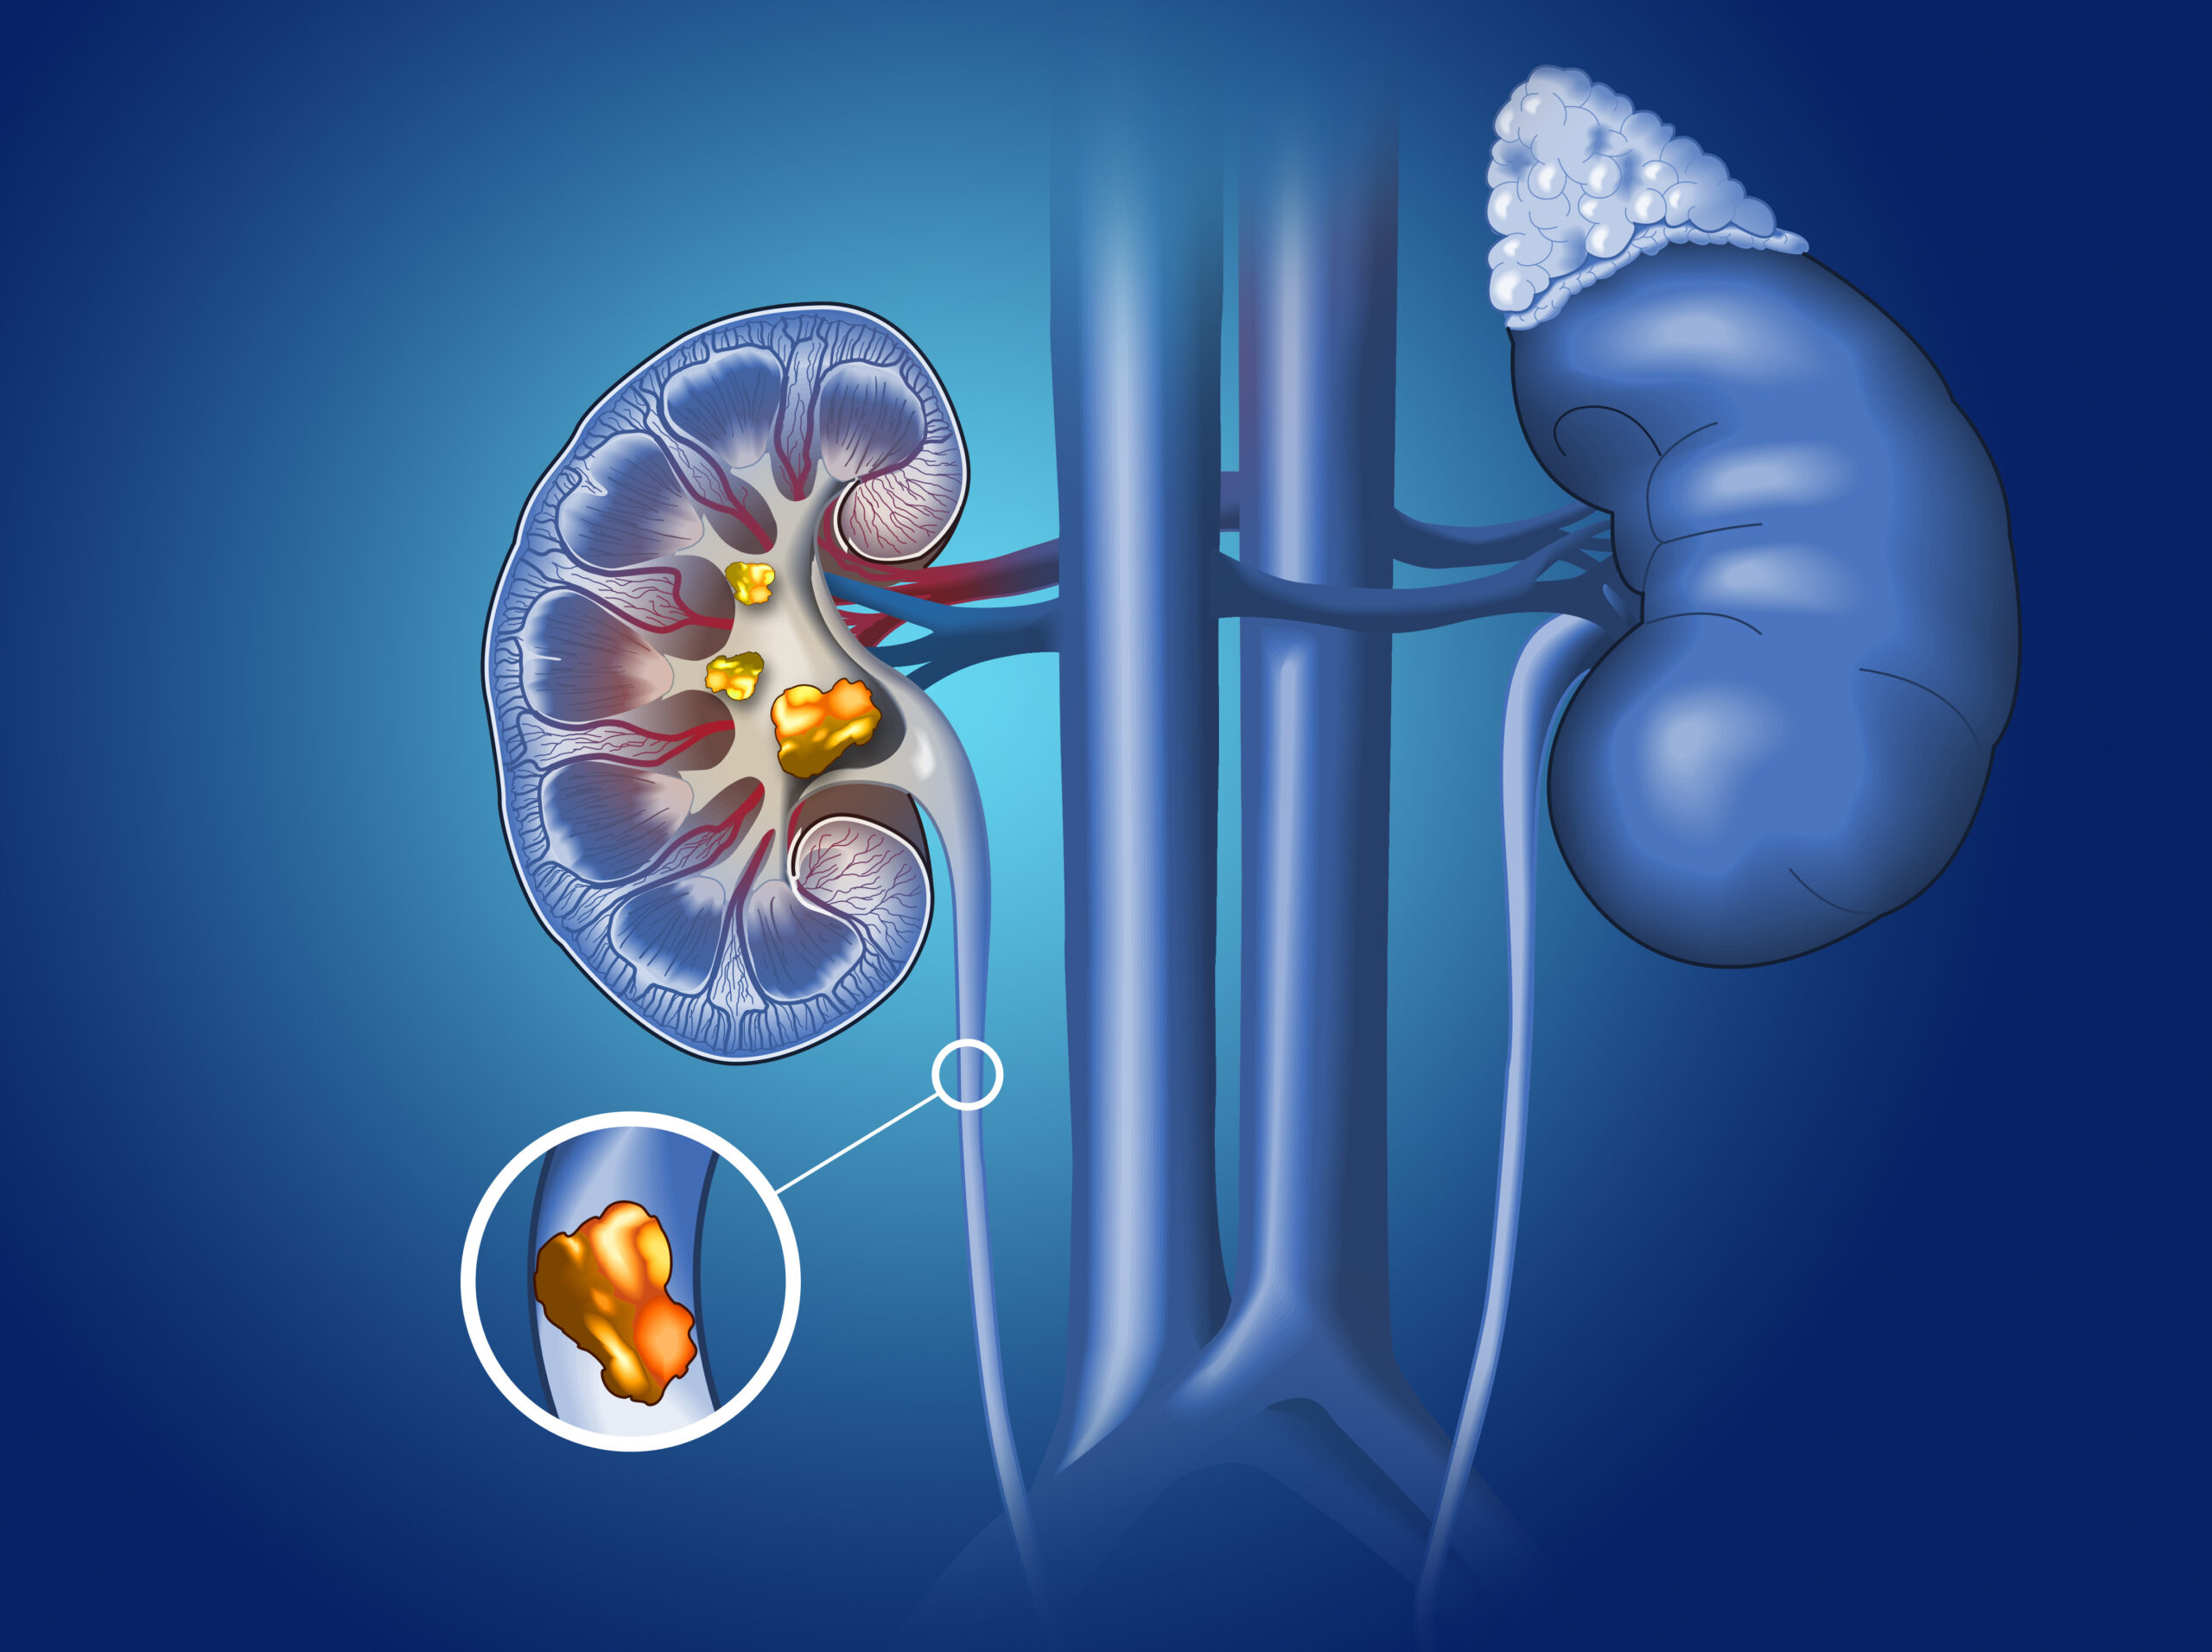 Kidney stones in kidney and ureter, medically illustration